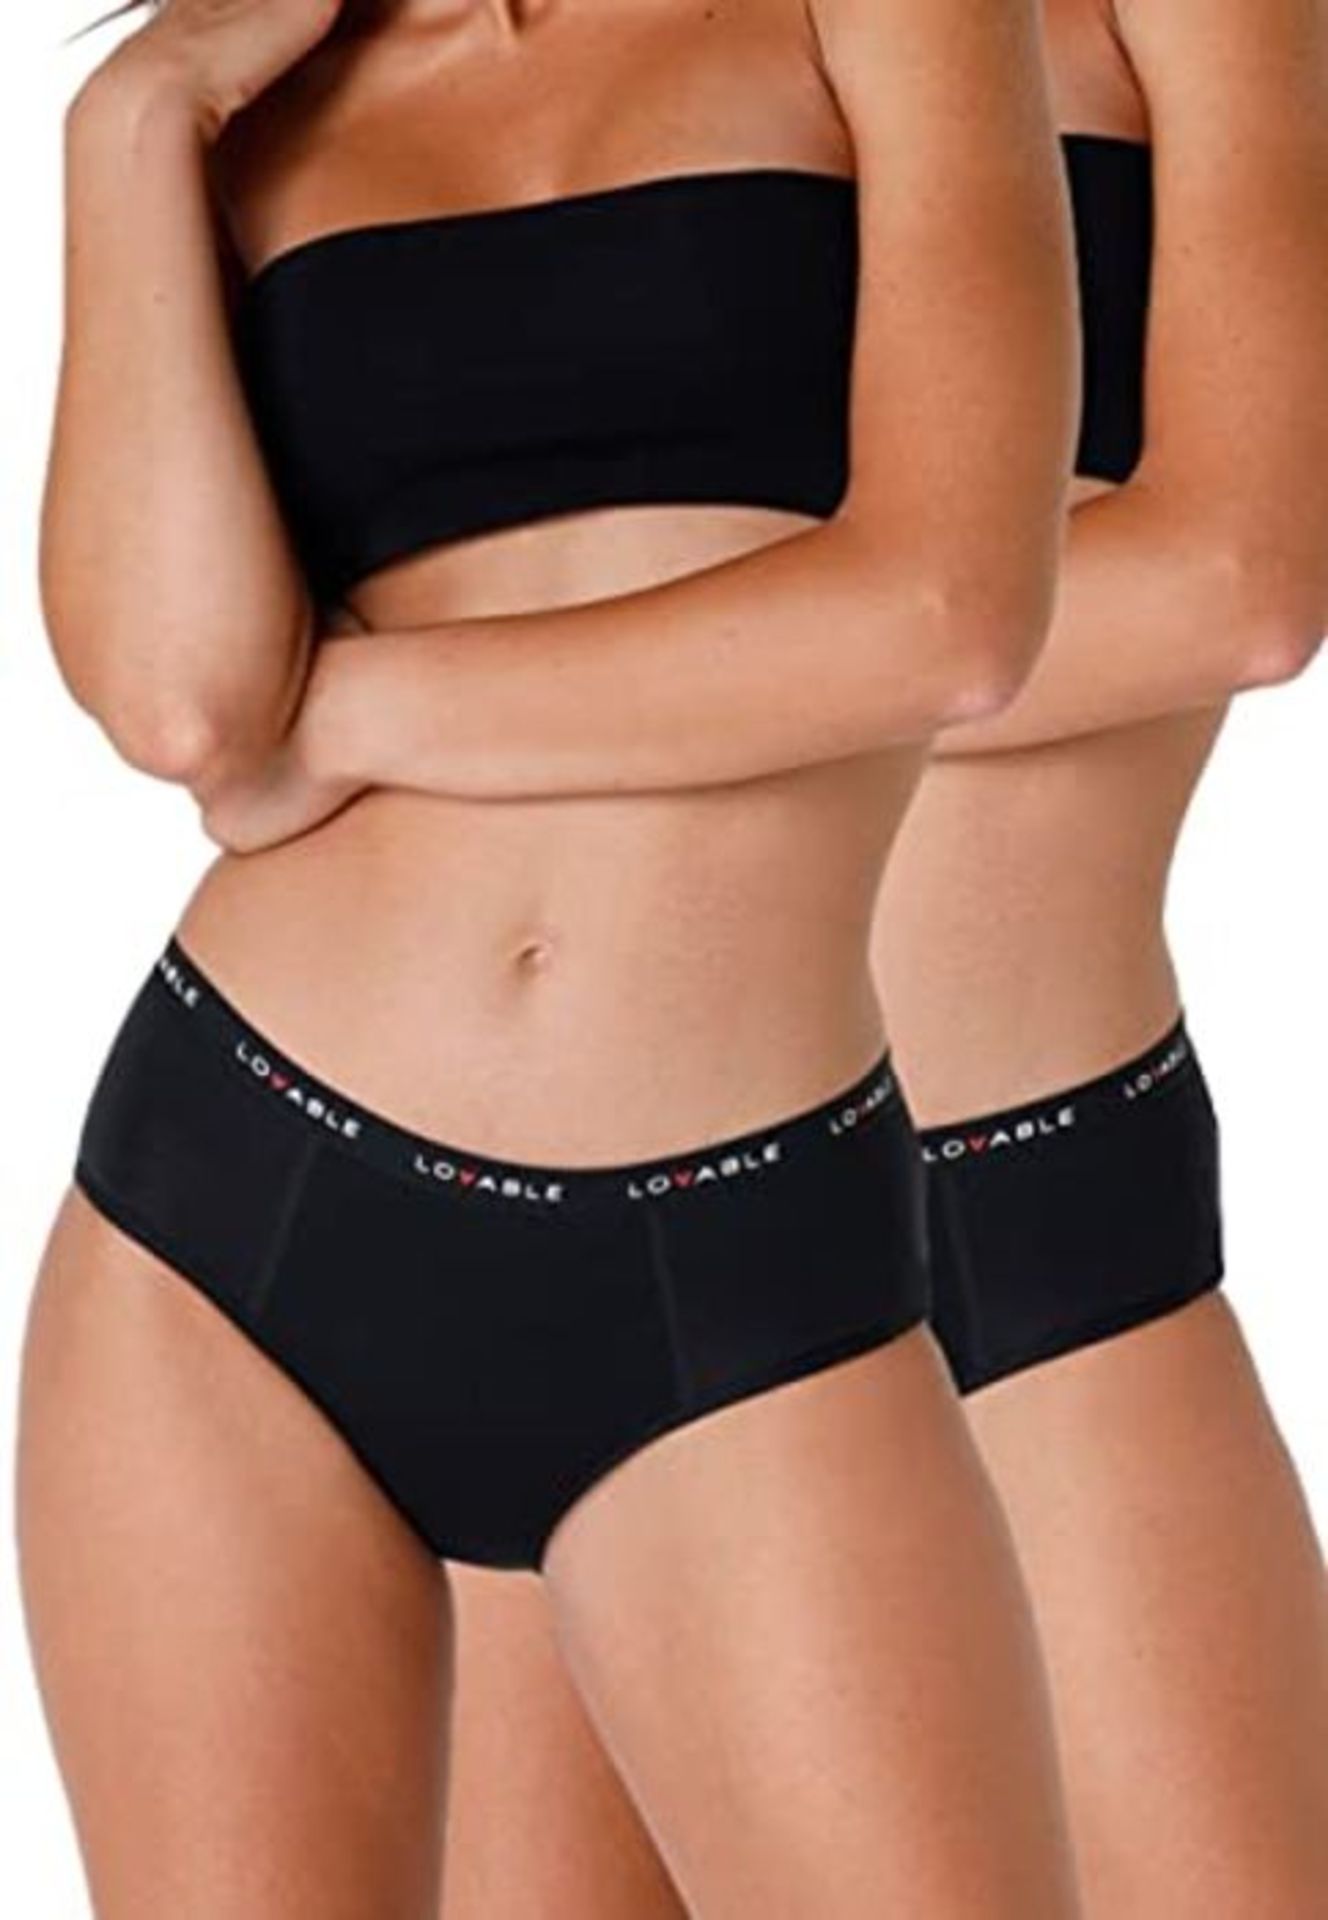 Lovable Women's Period Panties Underwear, Nero, L (Pack of 2) - Image 4 of 6